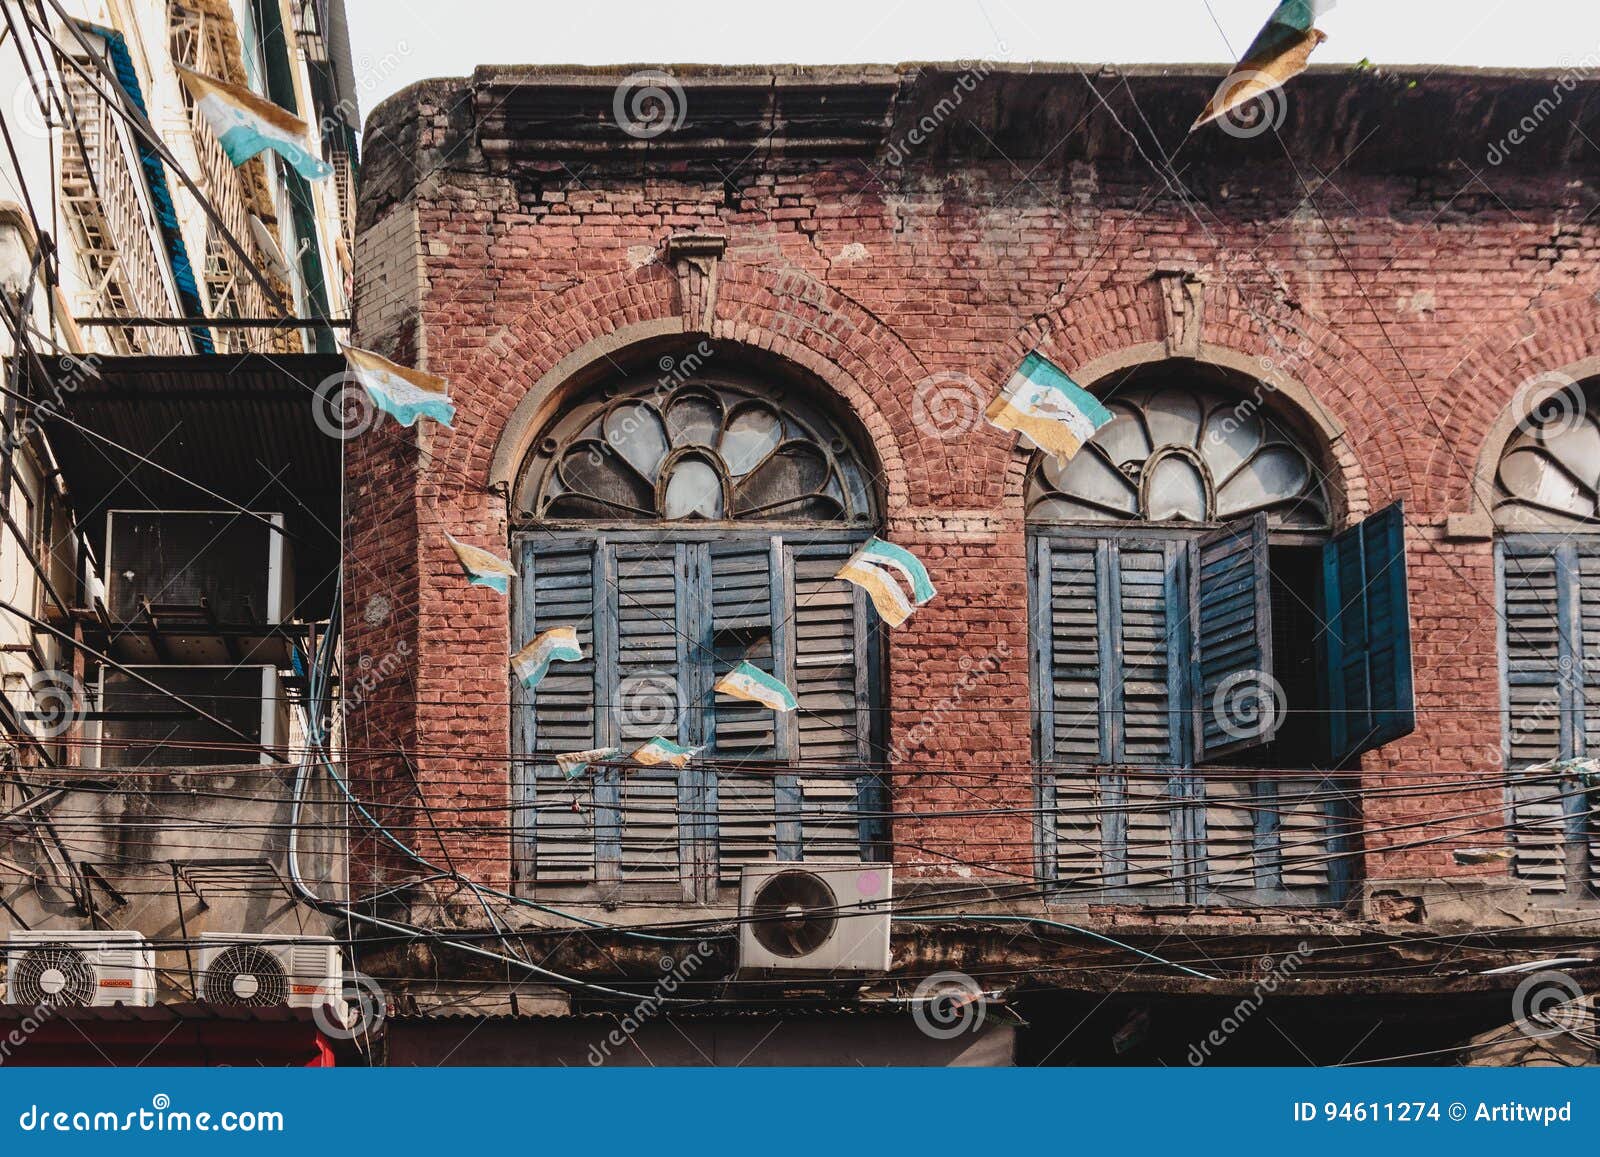 colonial style building facade in kolkata, india